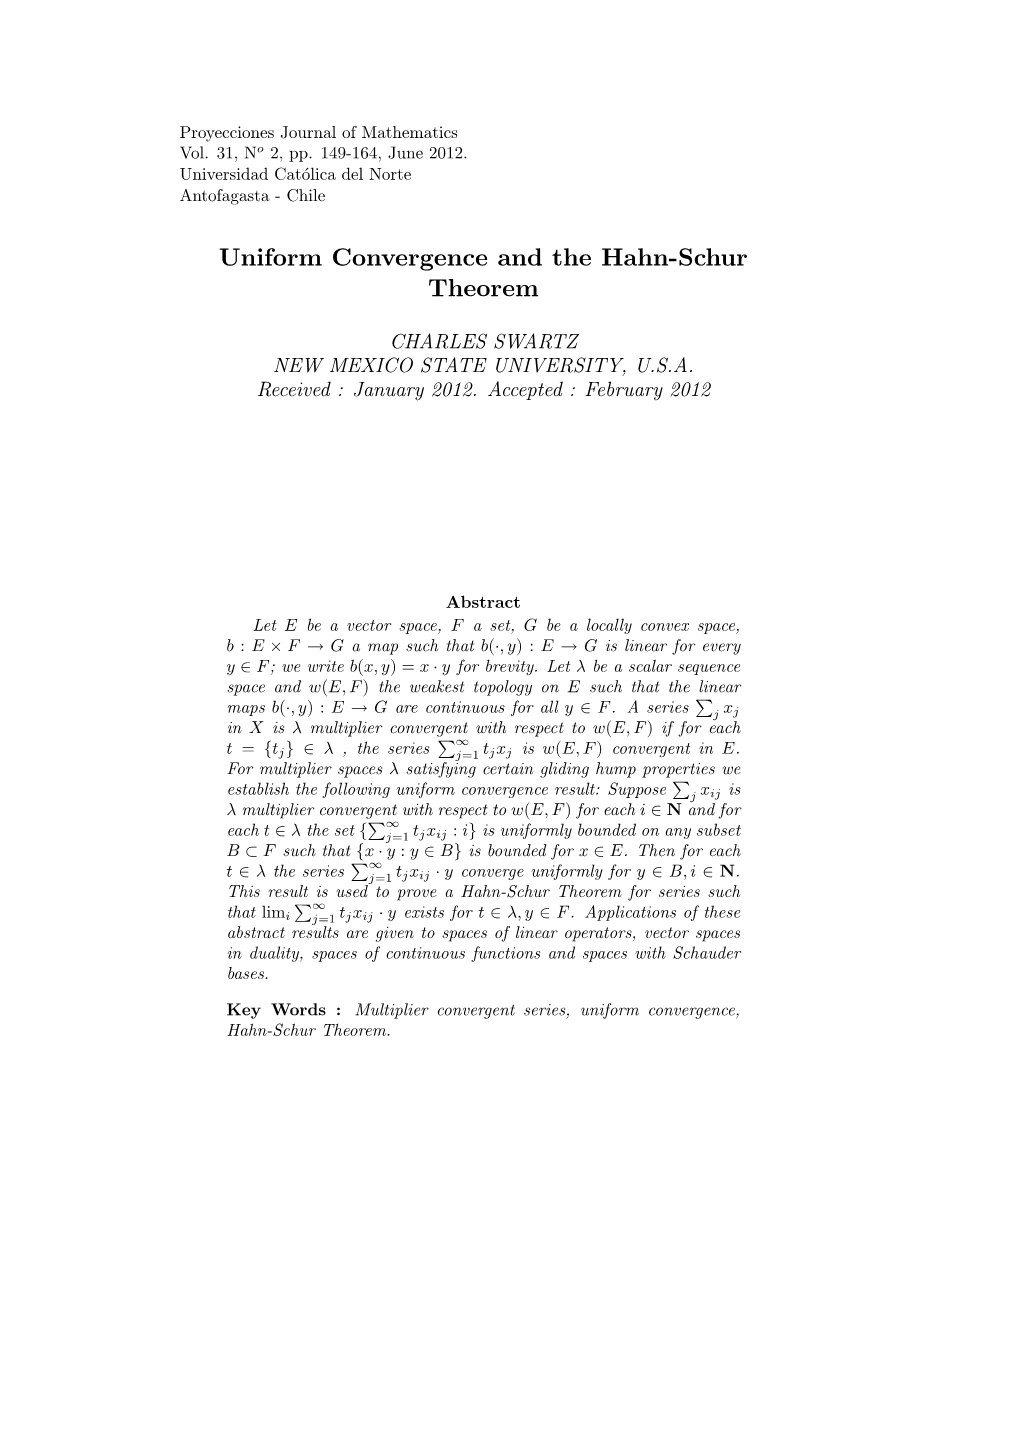 Uniform Convergence and the Hahn-Schur Theorem